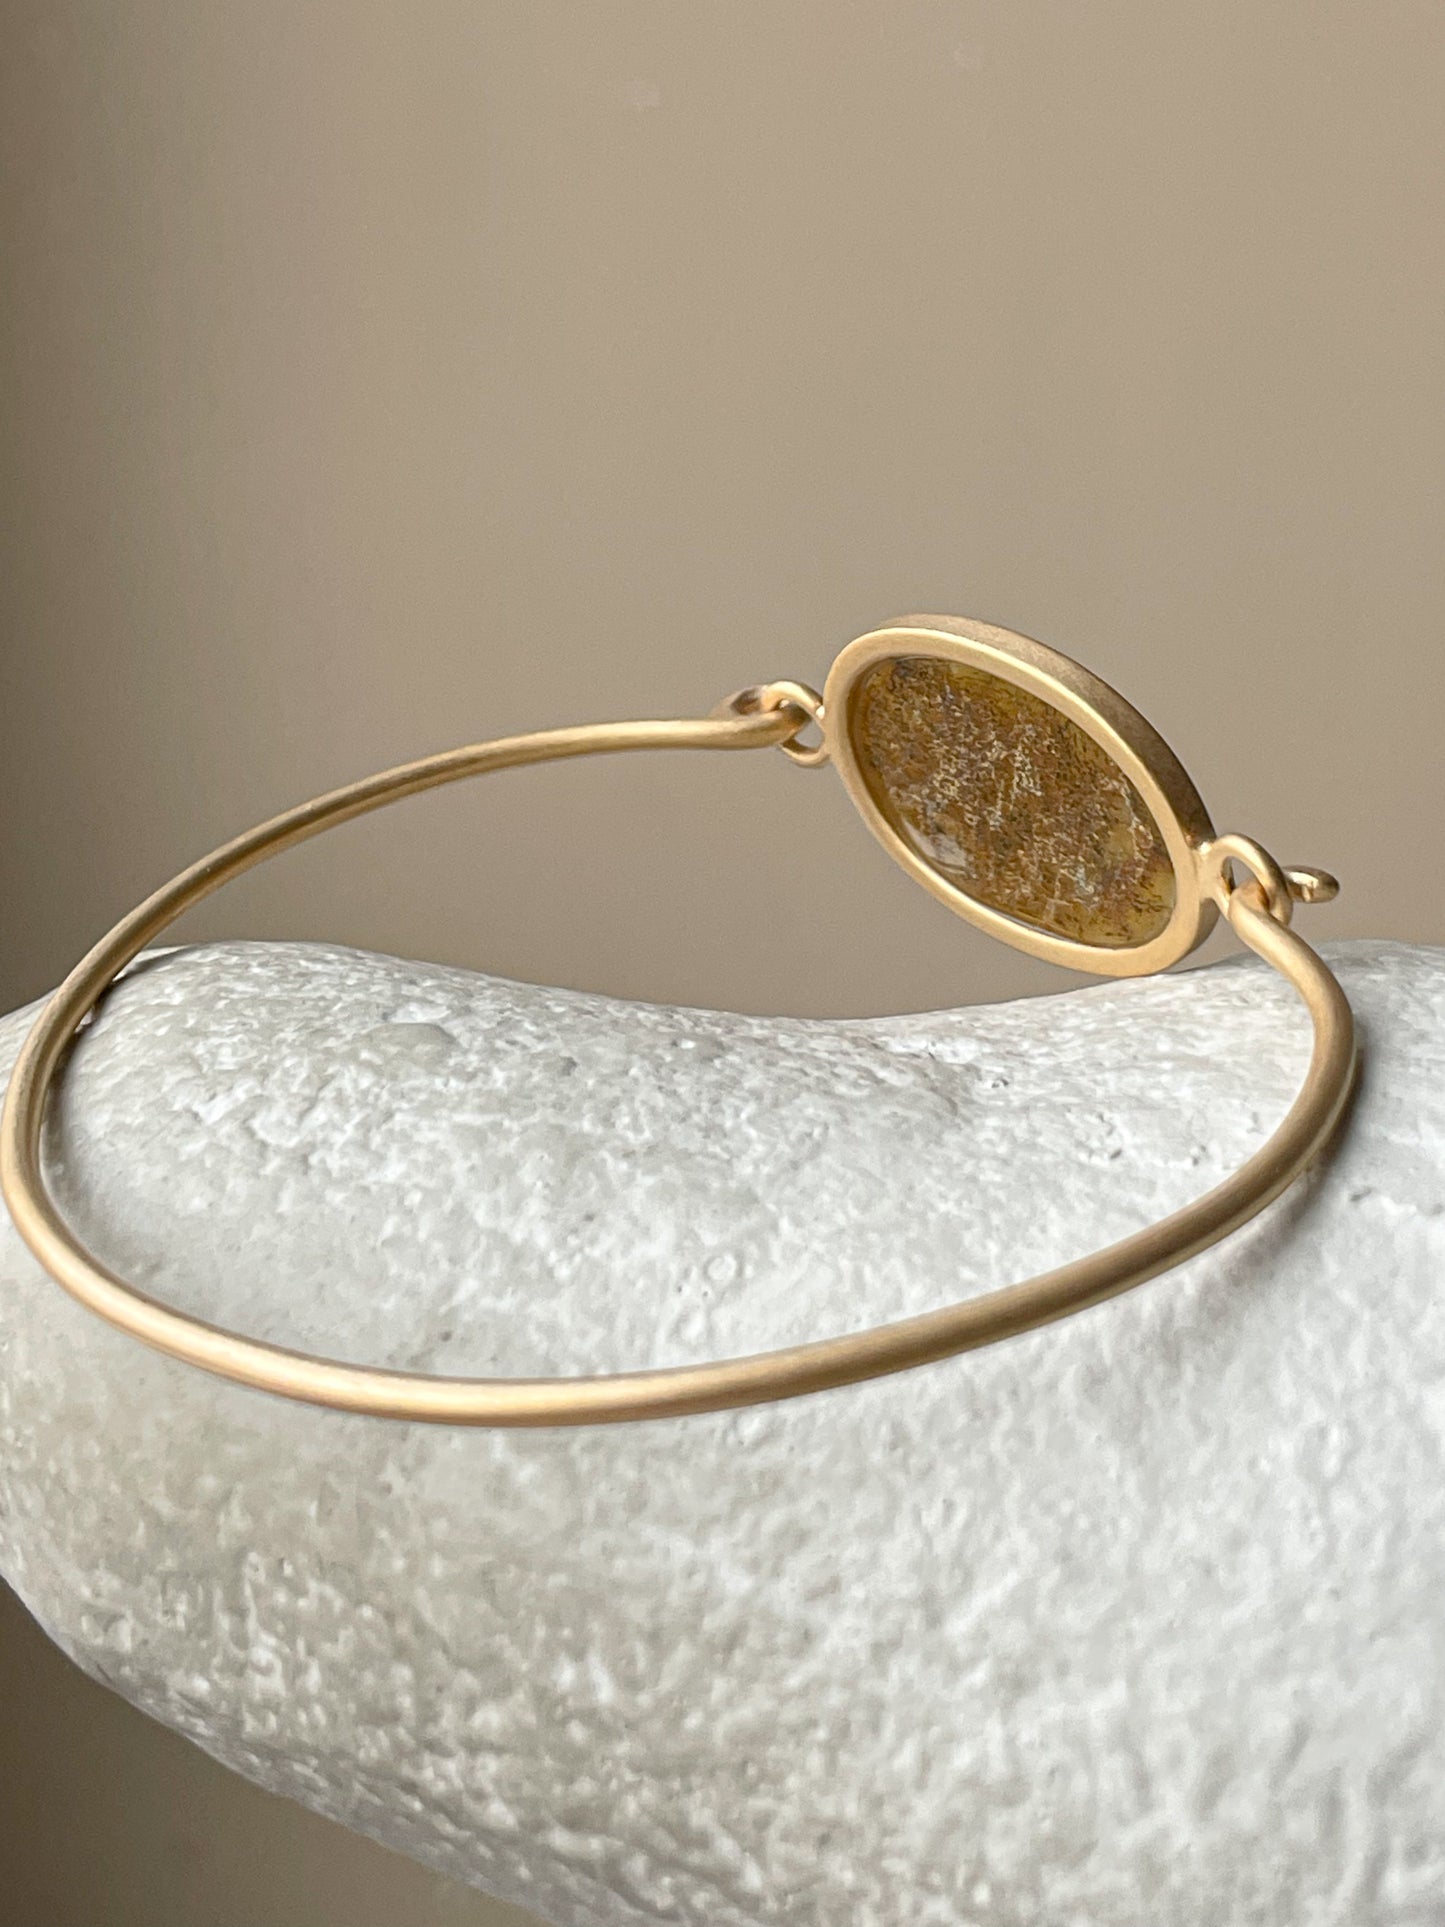 Landscape amber bangle bracelet - gold plated silver, size 6.8